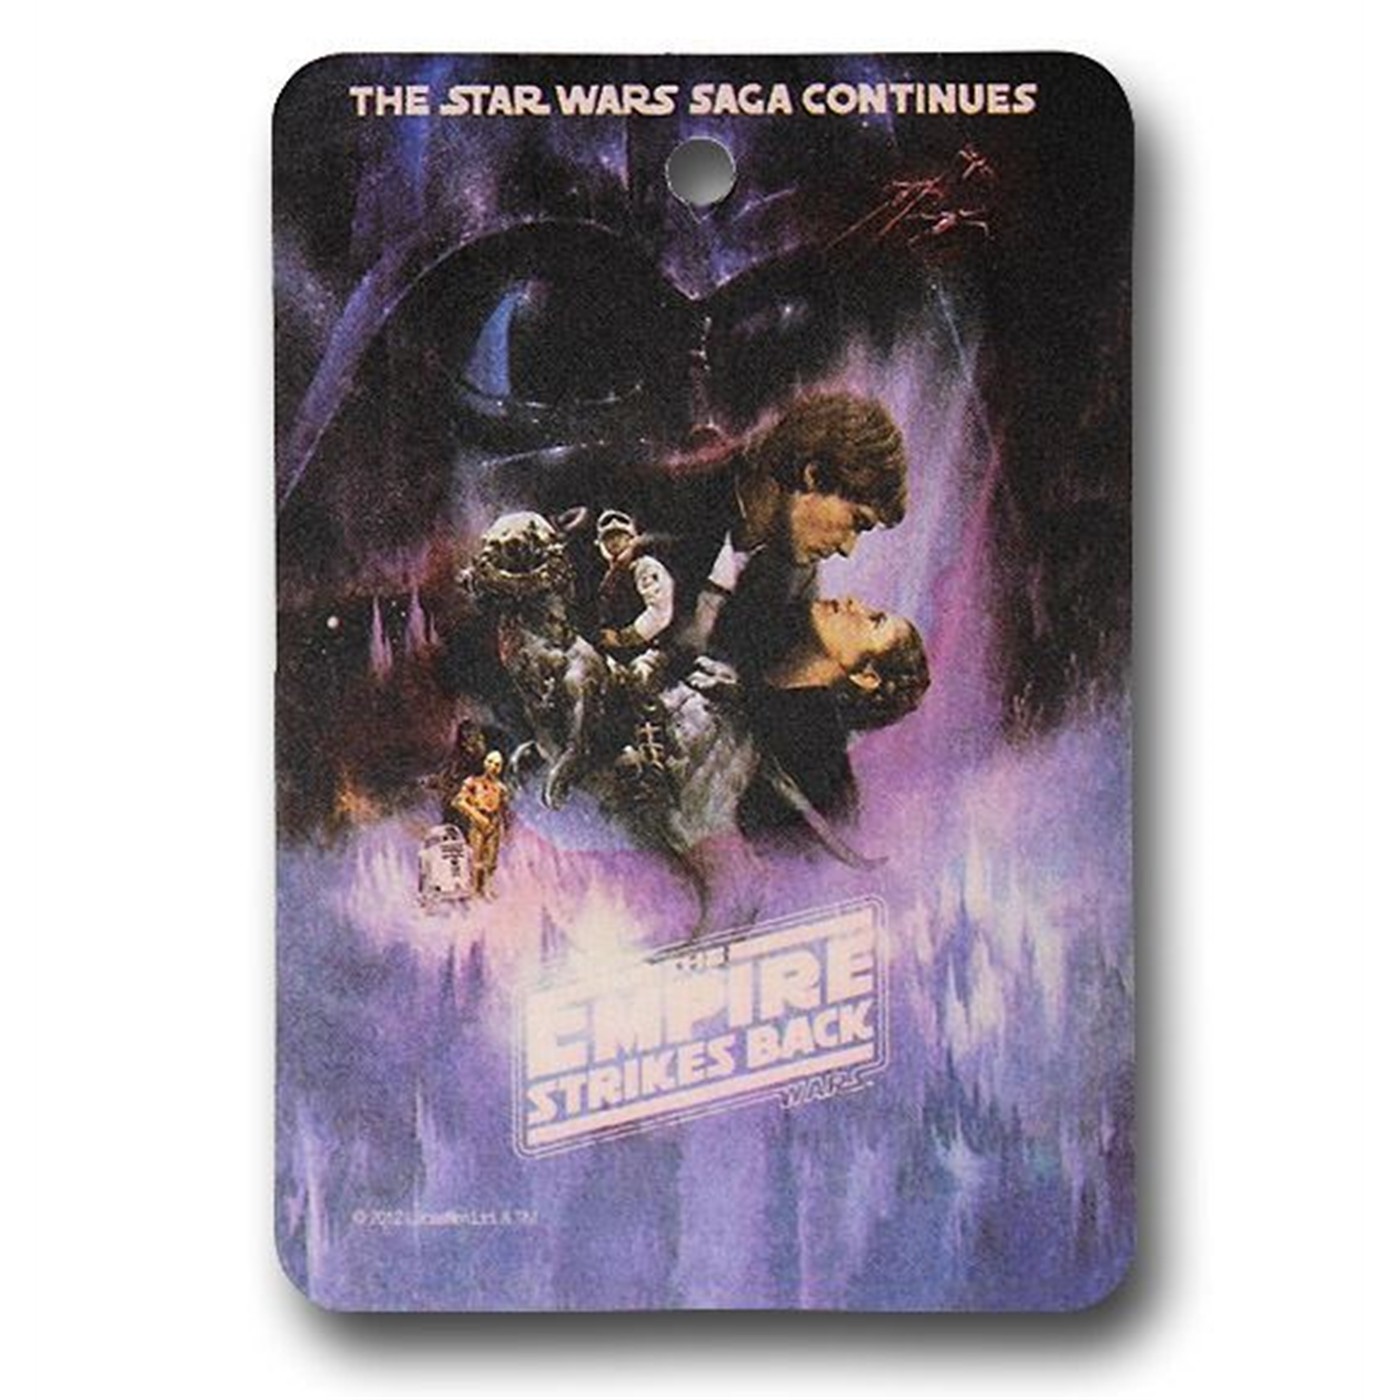 Star Wars Original Trilogy 3-Pack Air Fresheners